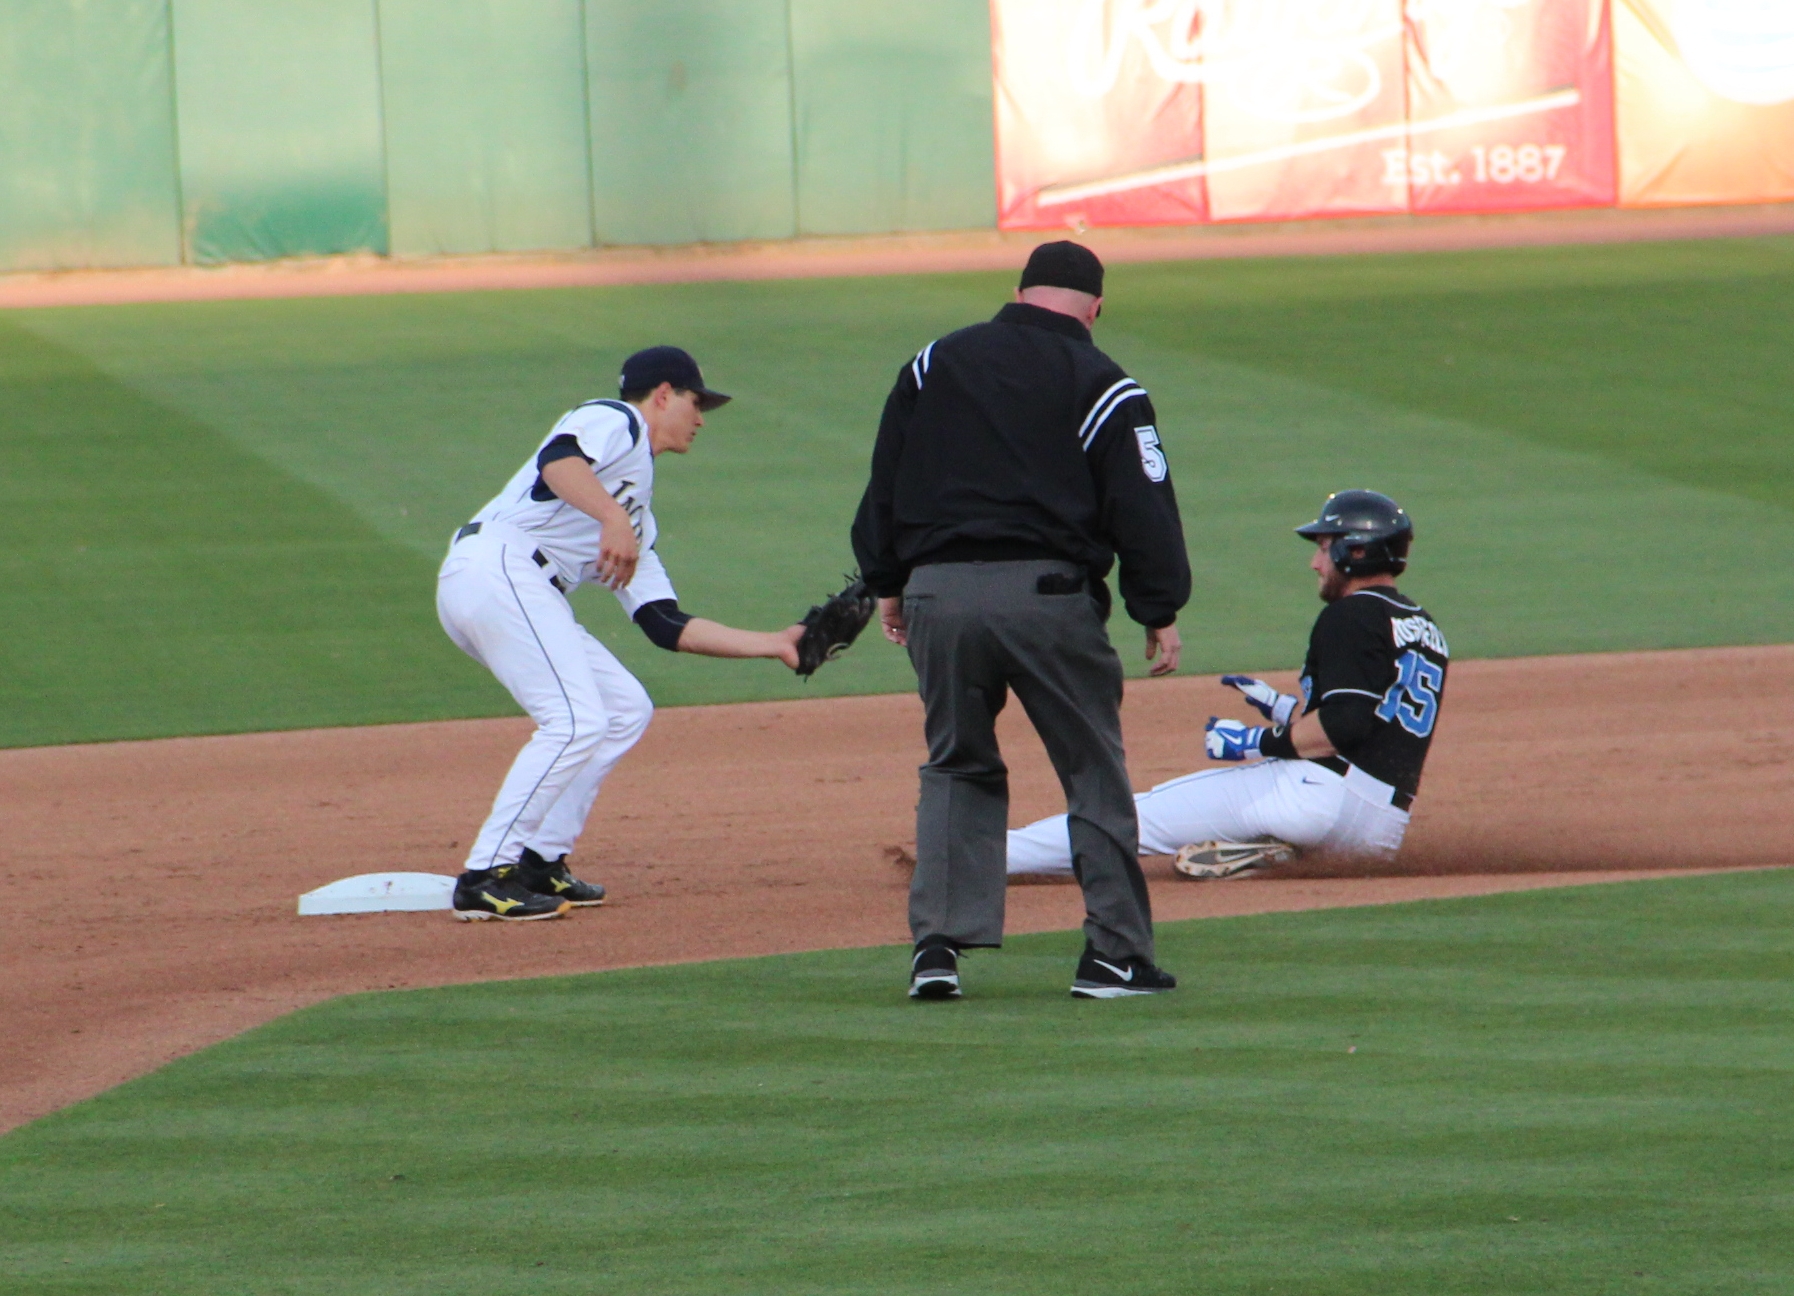 a baseball player sliding into a base during a game